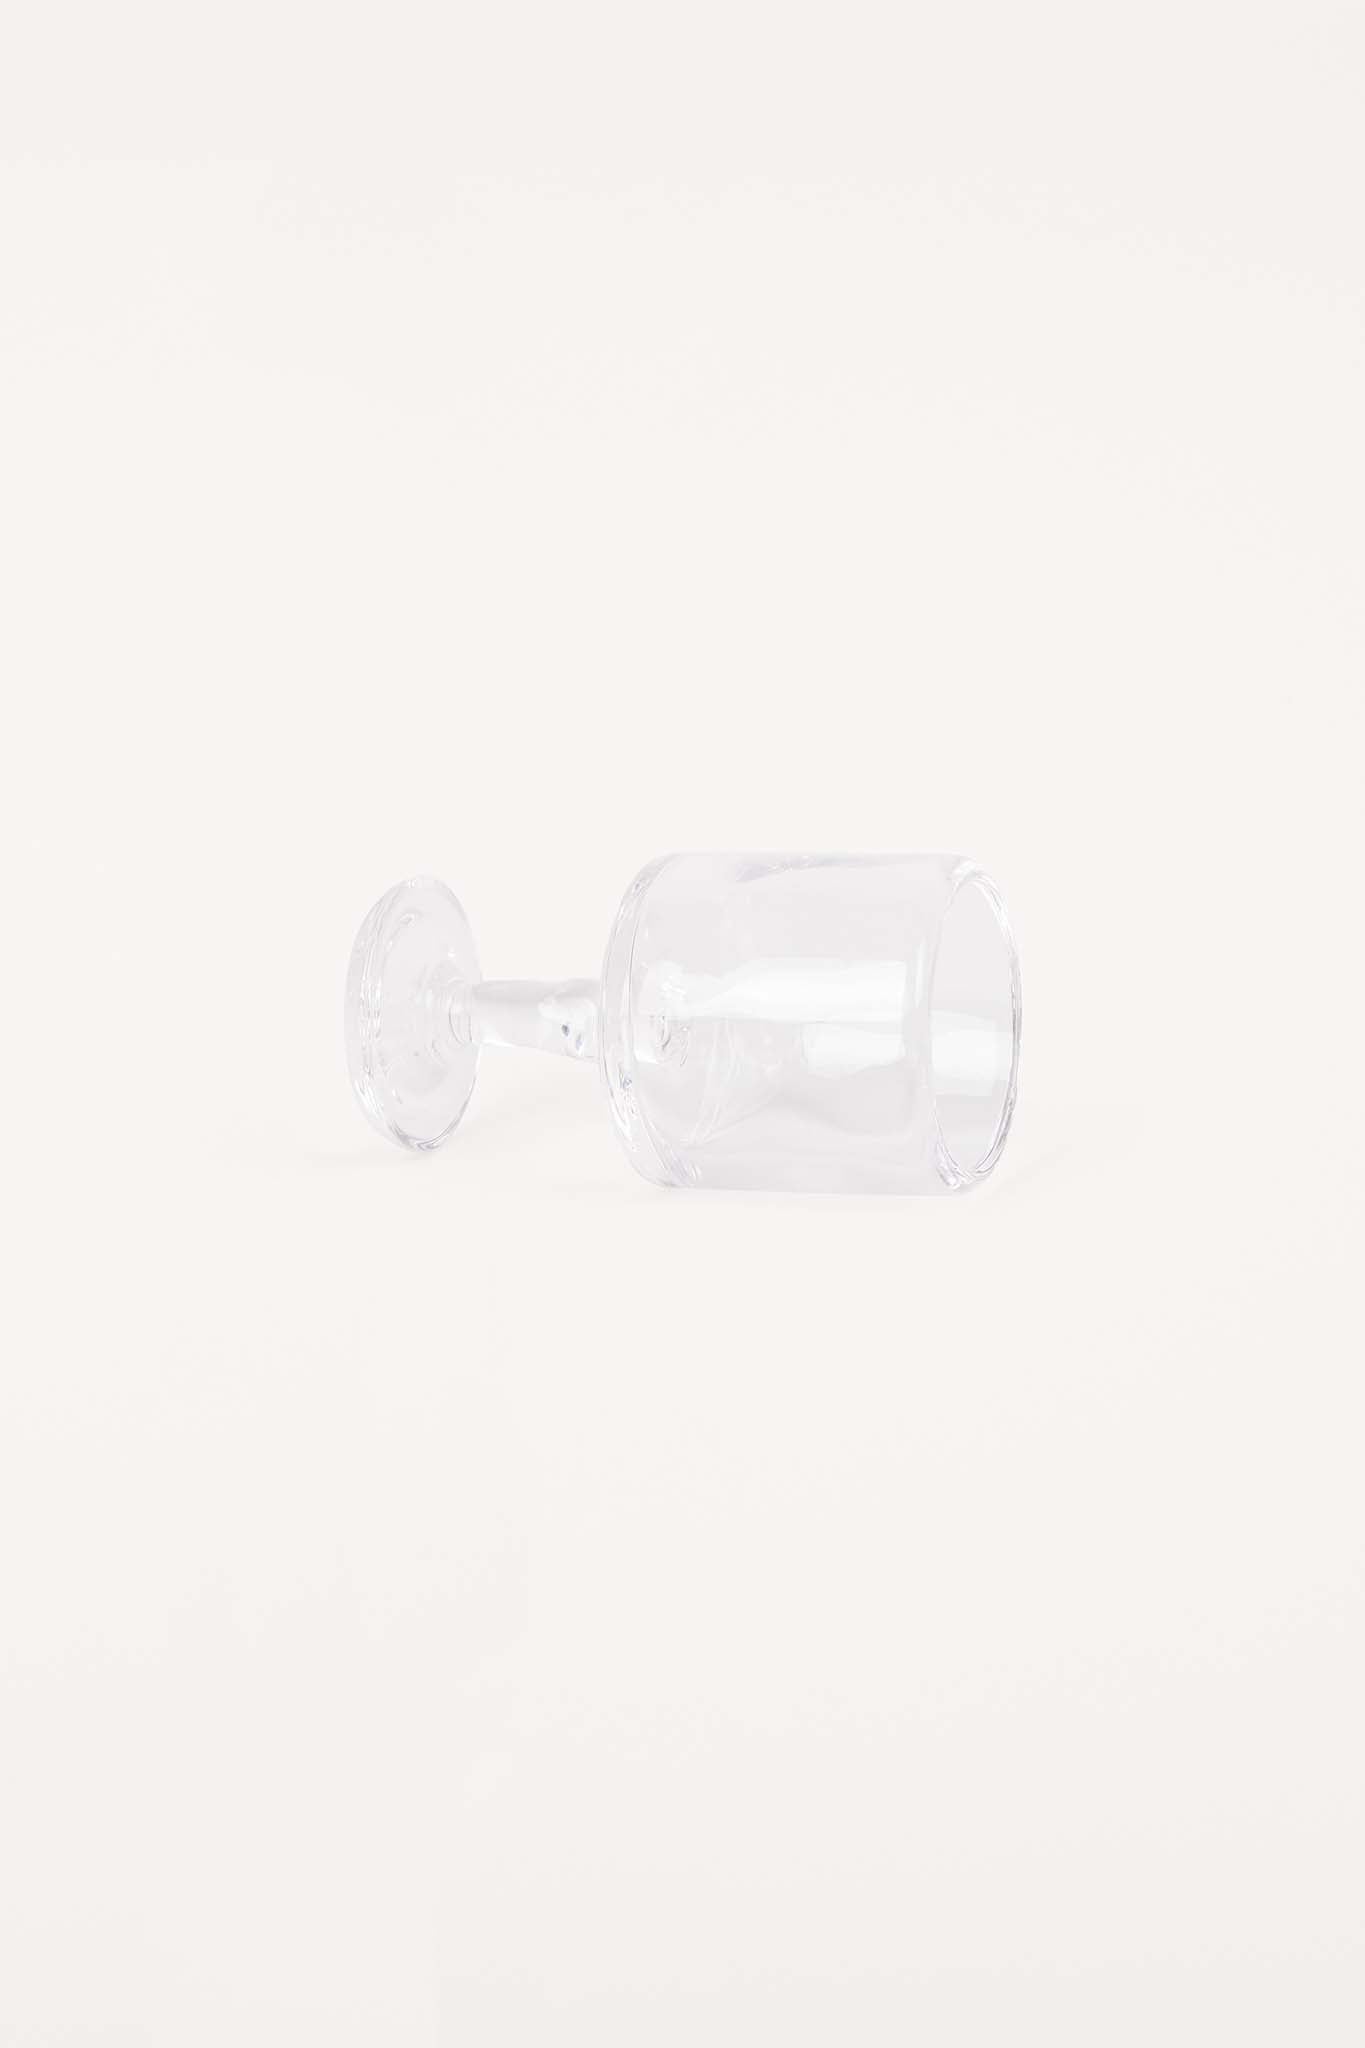 Frama 0405 Stem Glass Medium - Marz DesignsFRAMA